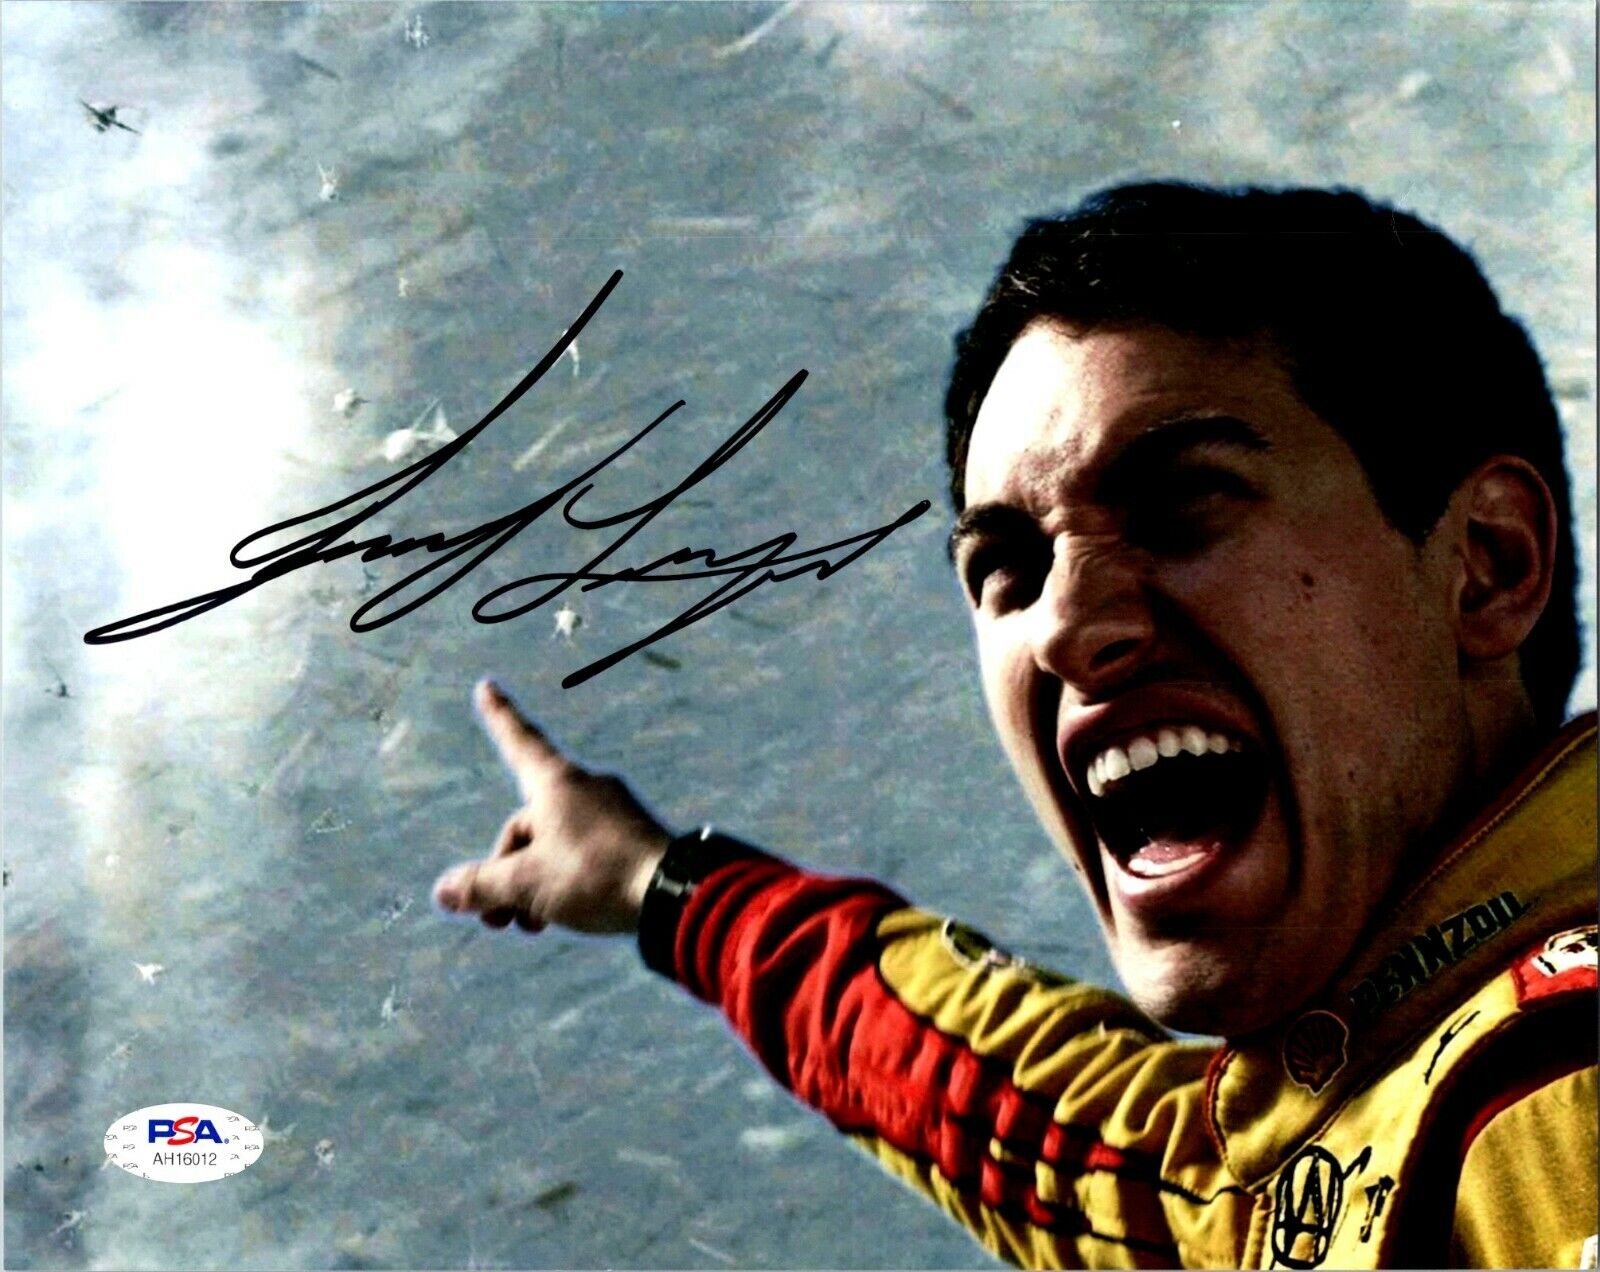 Joey Logano Nascar Driver Signed 8x10 Color Photo With PSA COA